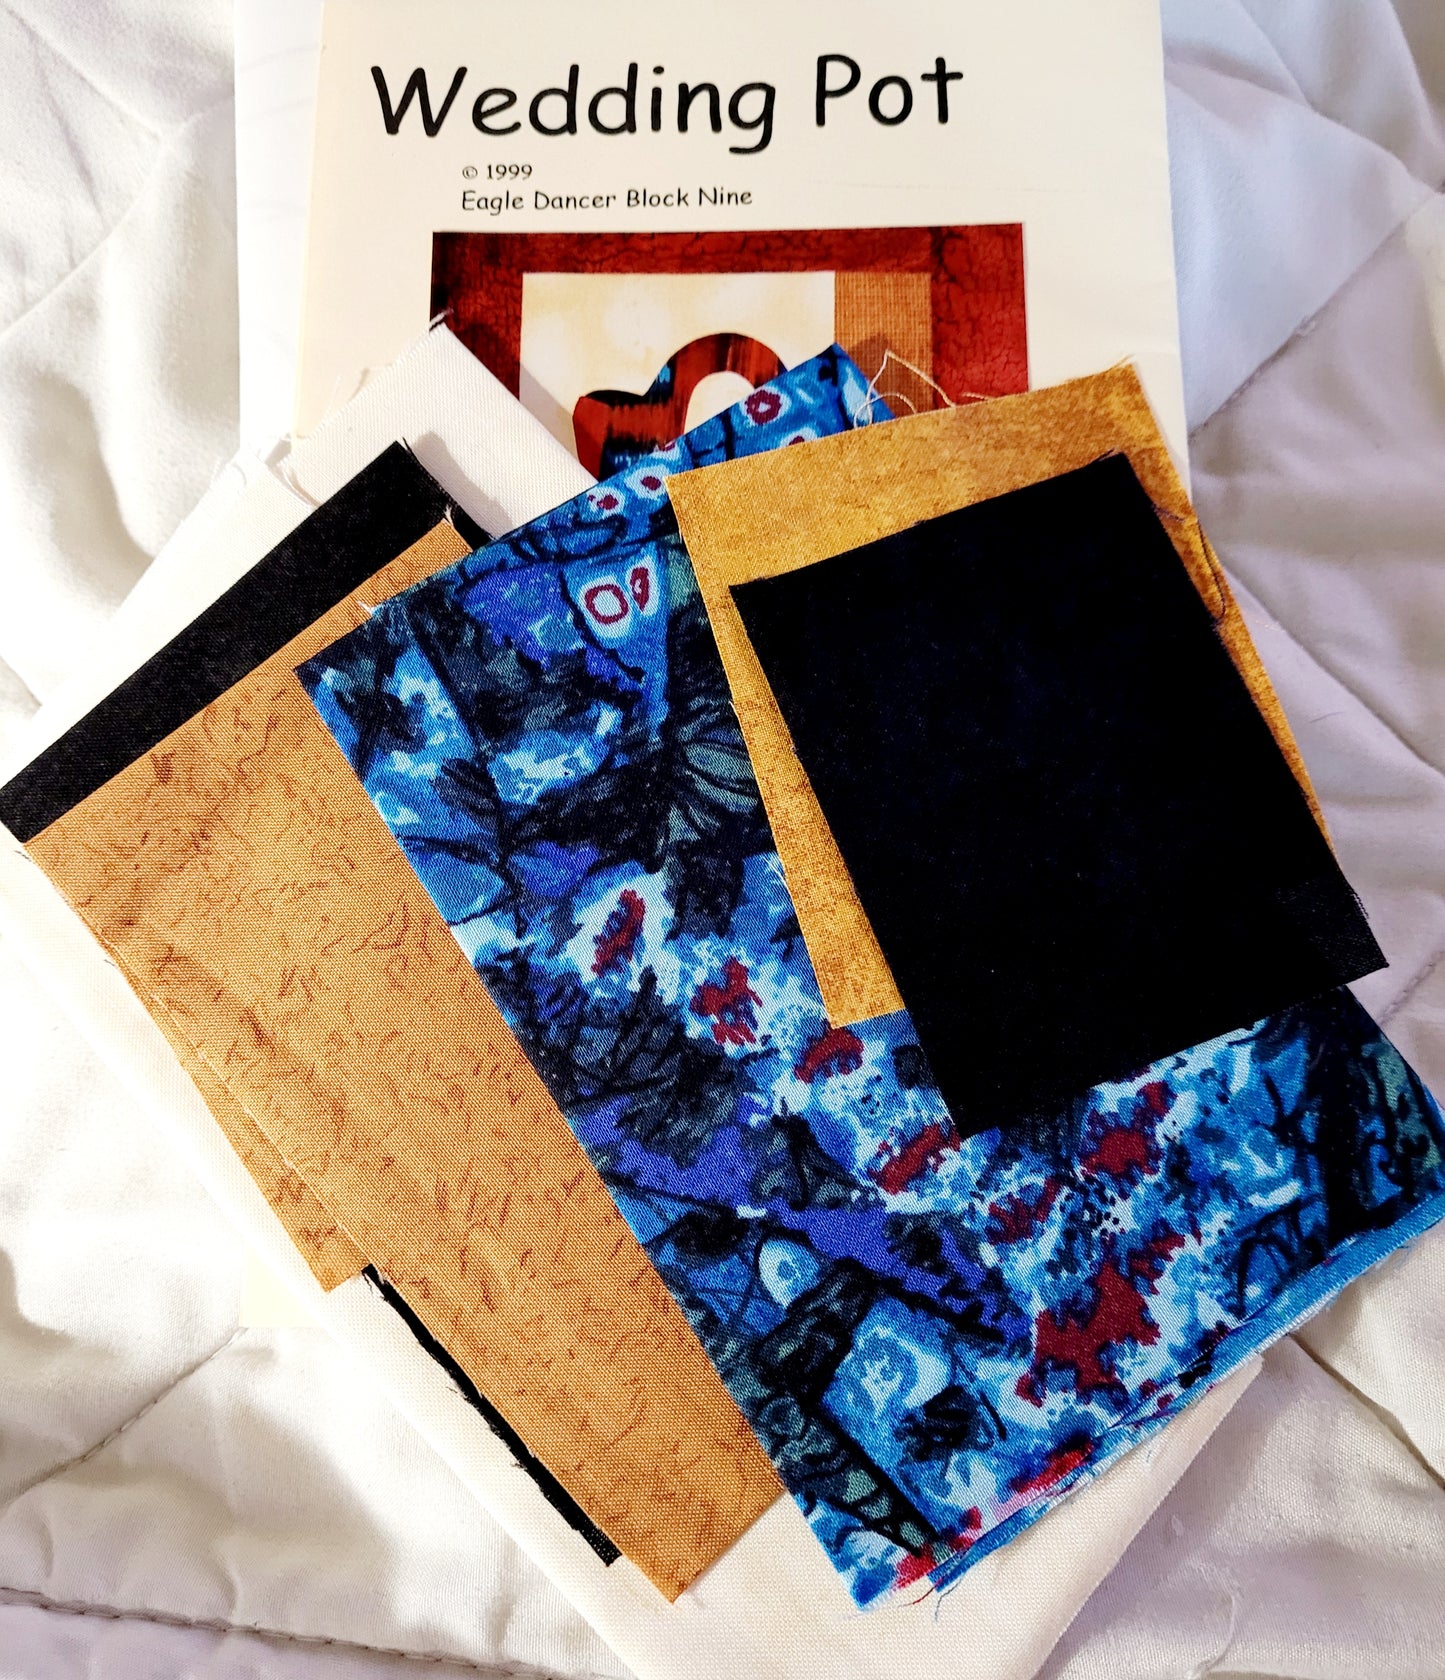 NEW *Eagle Dancer Shadow Box Quilt Pattern: Wedding Pot Block #9 & Material